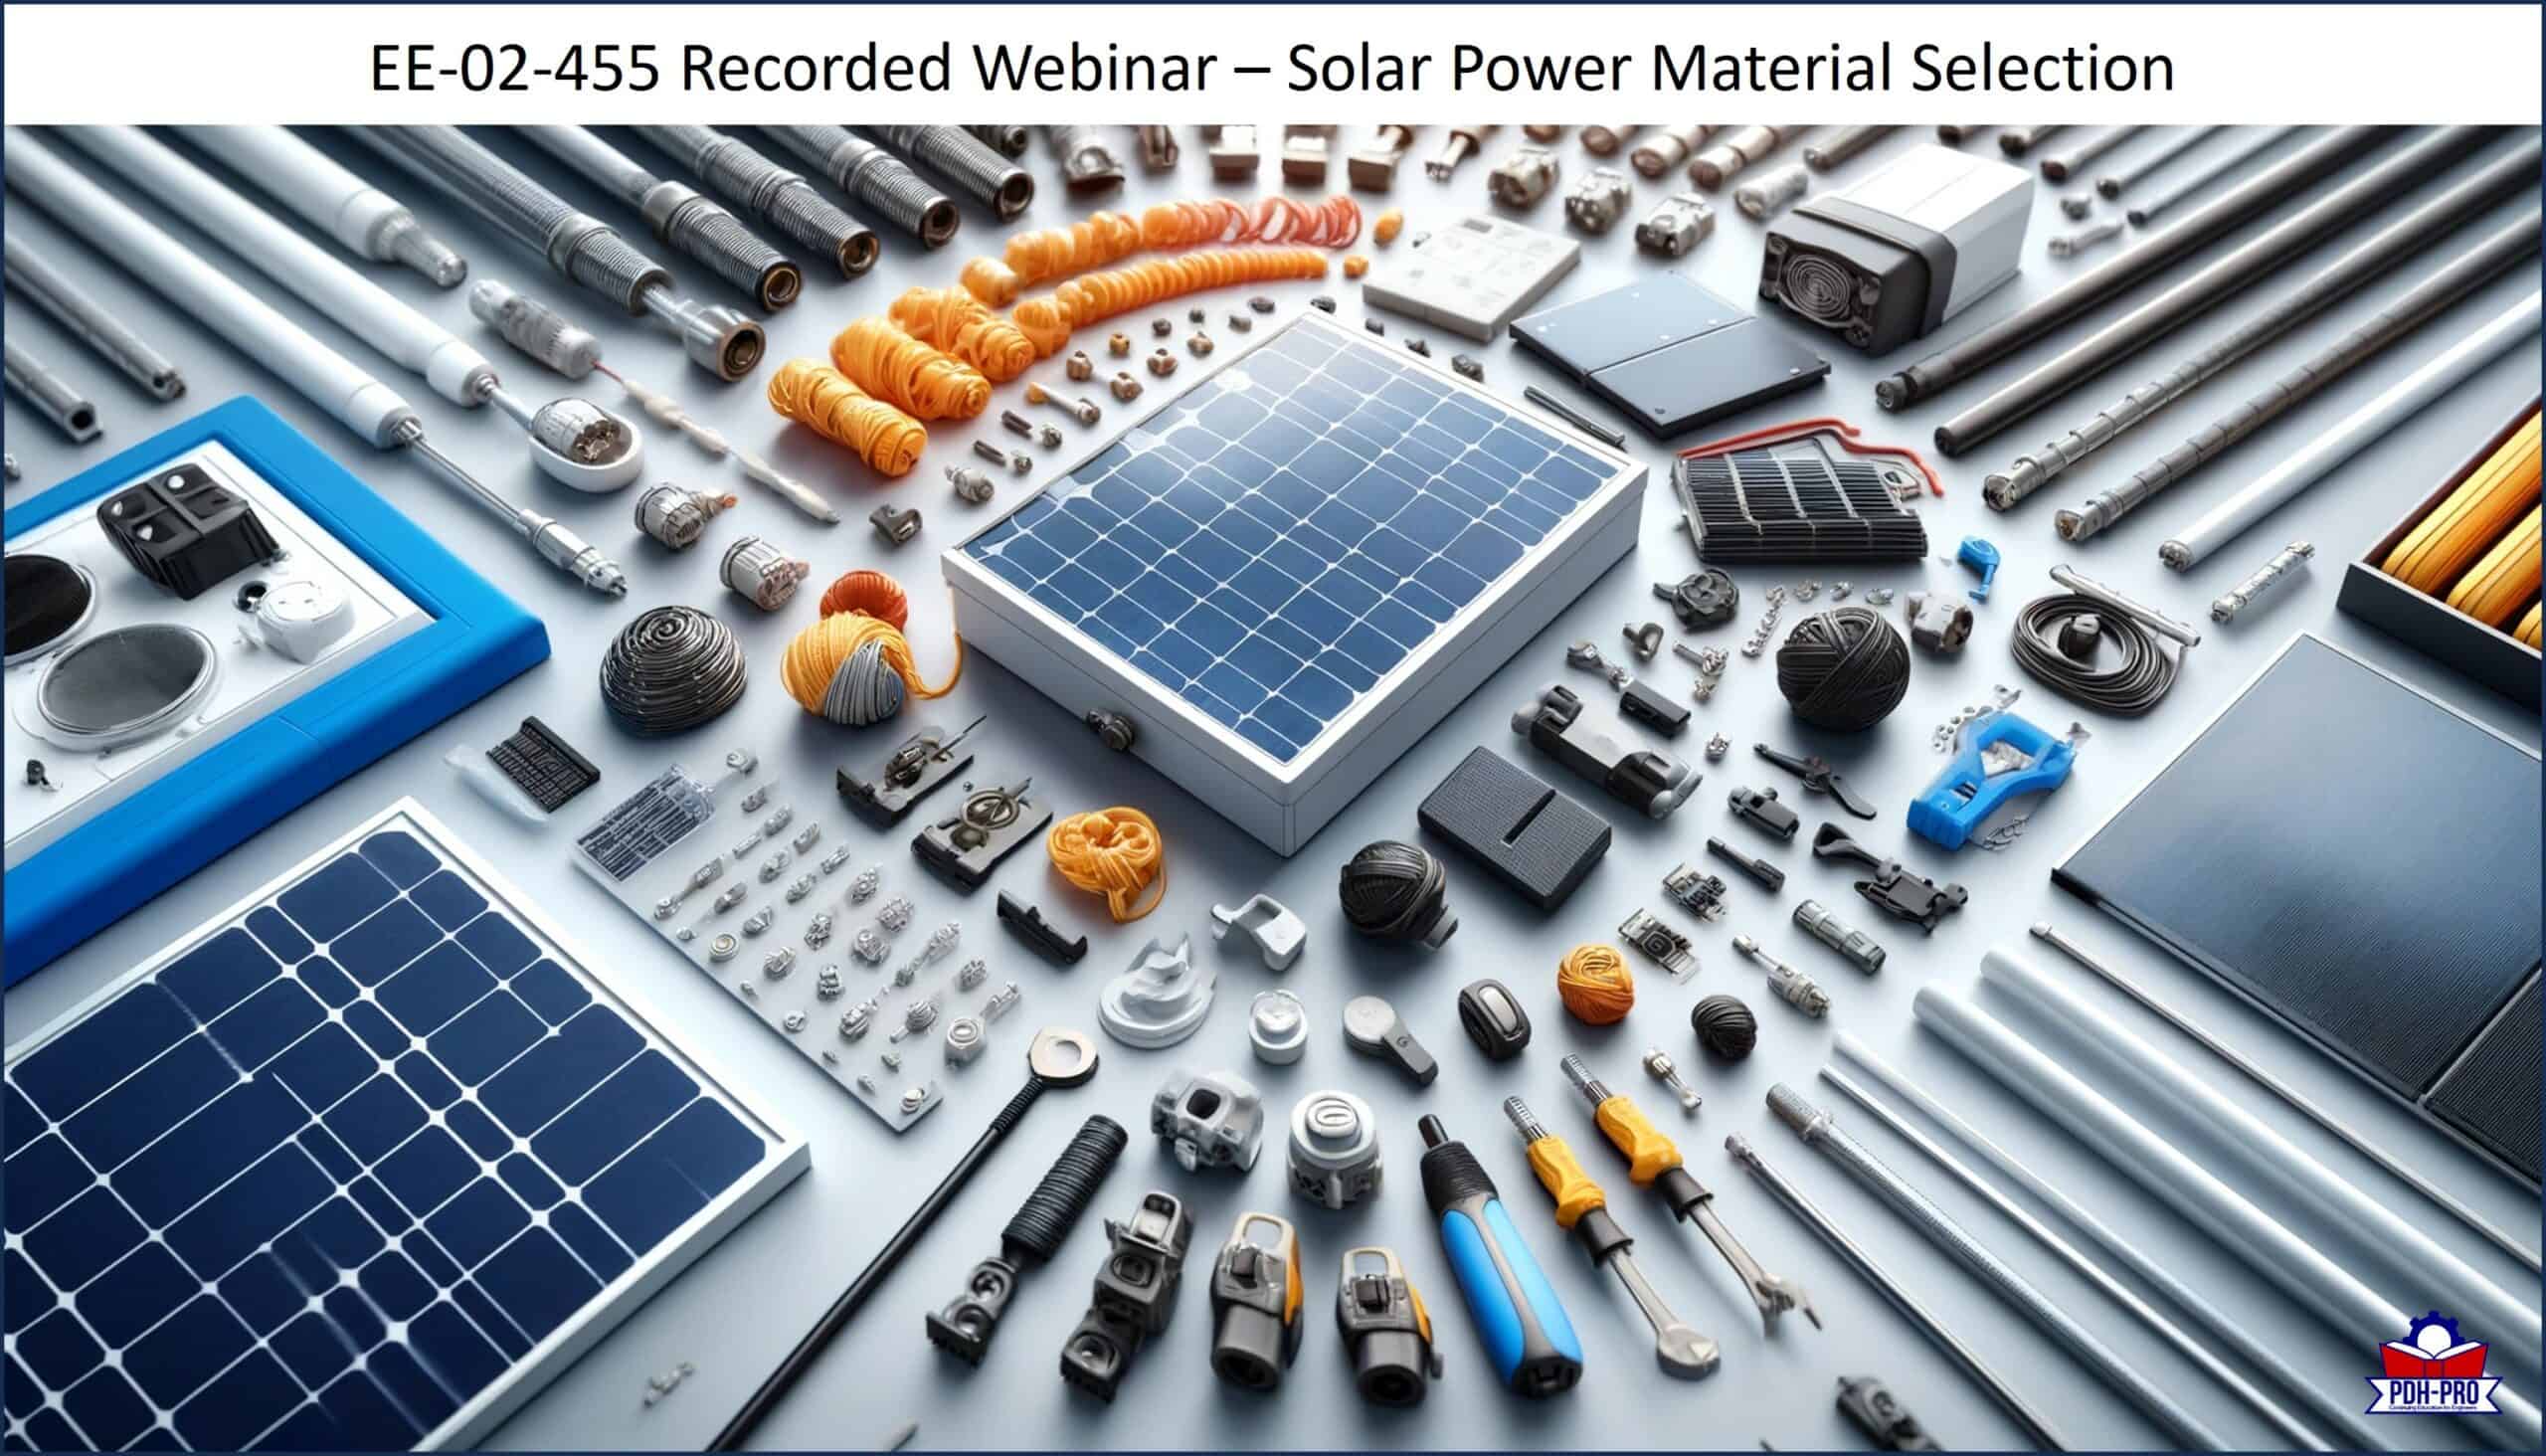 Recorded Webinar – Solar Power Material Selection